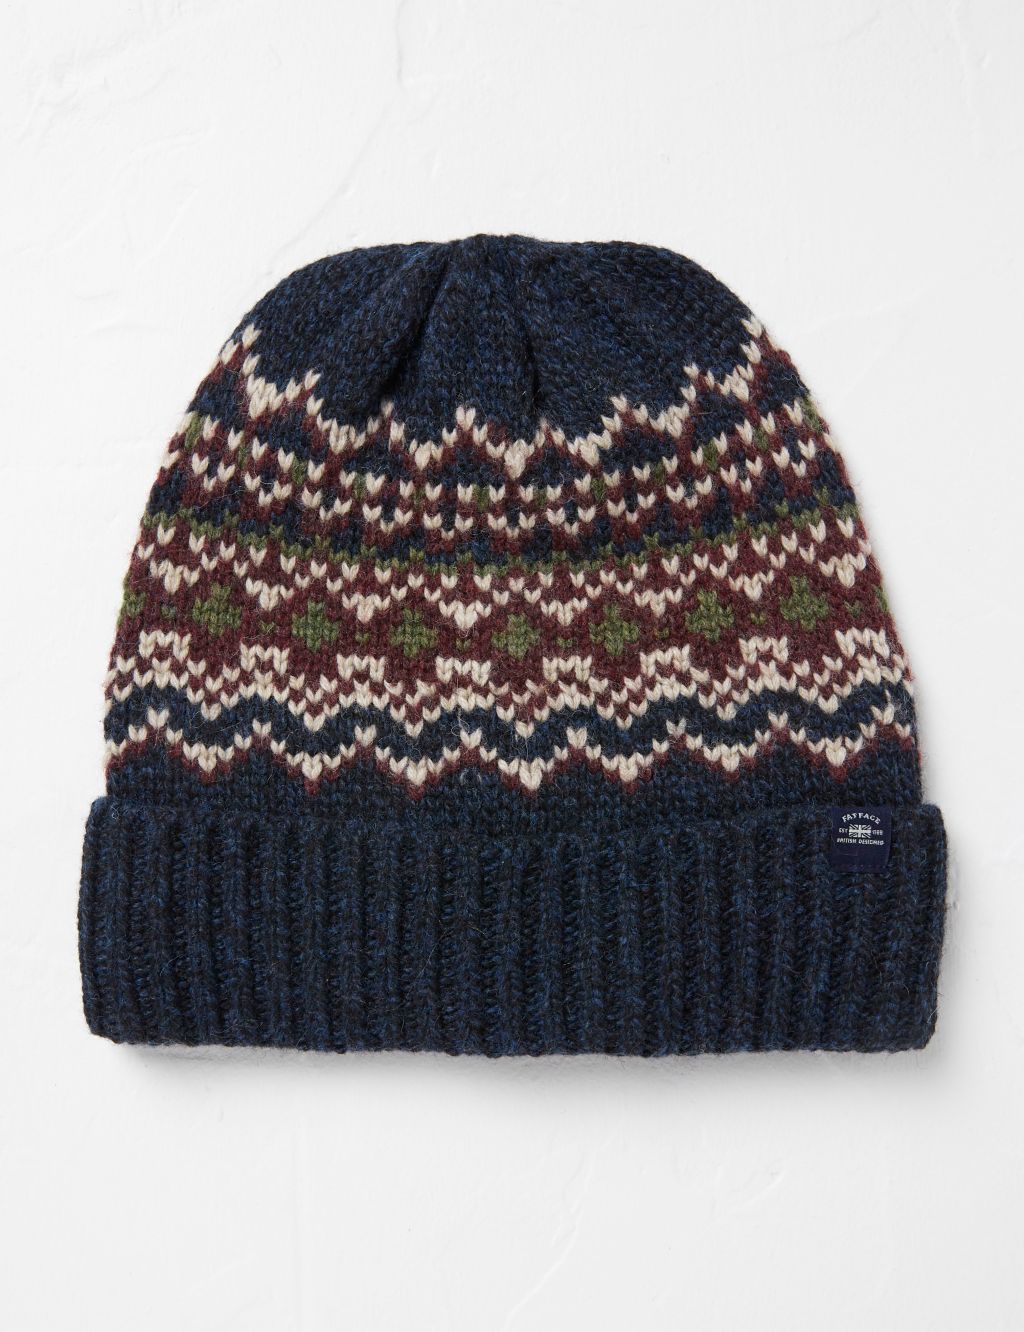 Wool Blend Fair Isle Knitted Beanie Hat 1 of 2